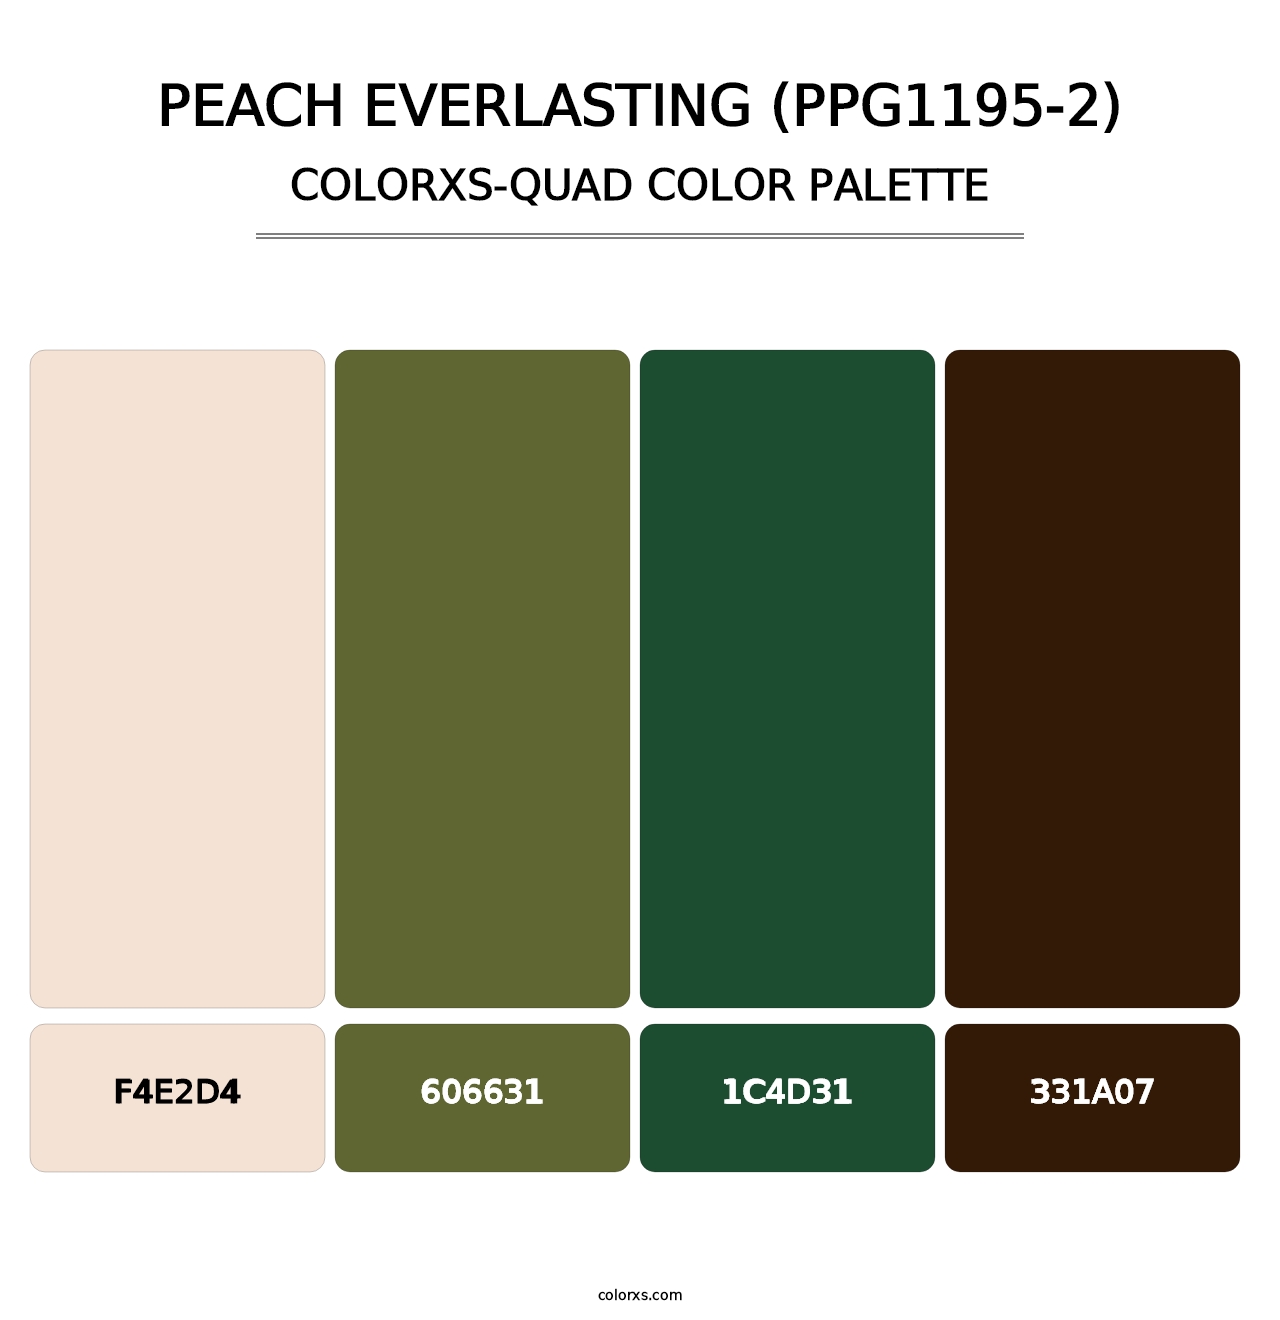 Peach Everlasting (PPG1195-2) - Colorxs Quad Palette